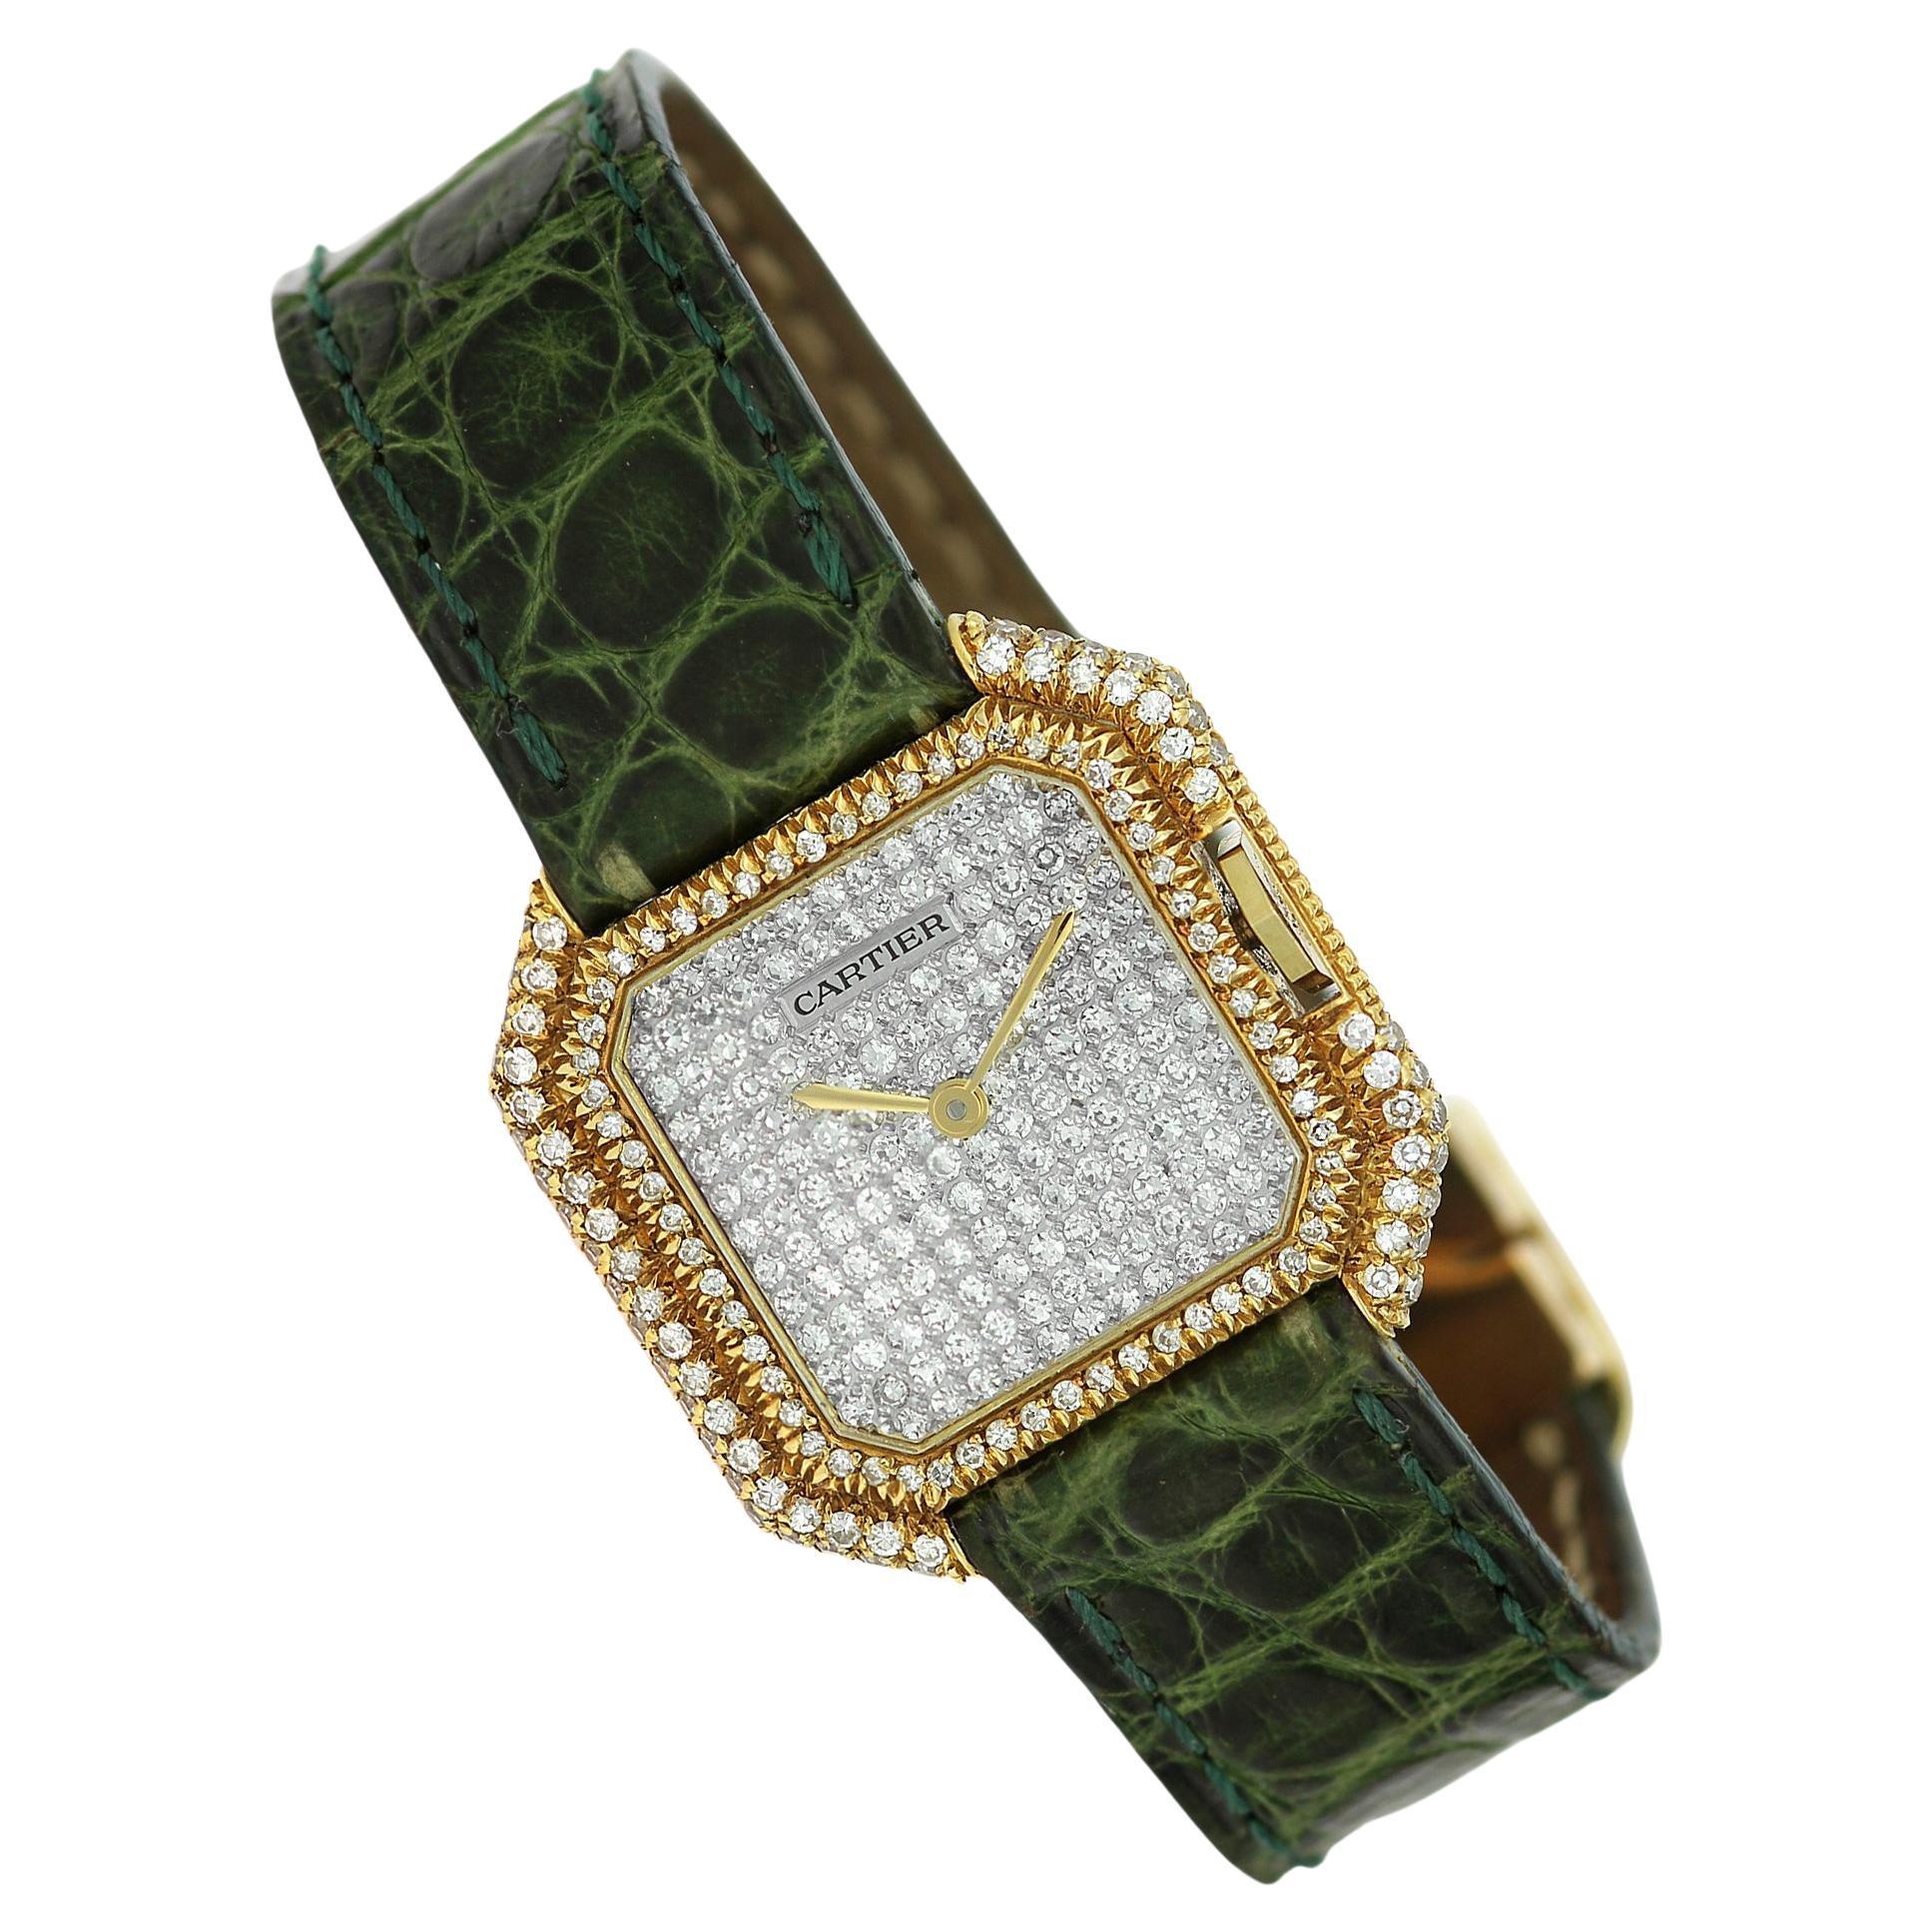 Diamond Set Cartier Watch in 18 K Yellow Gold with Original Box 